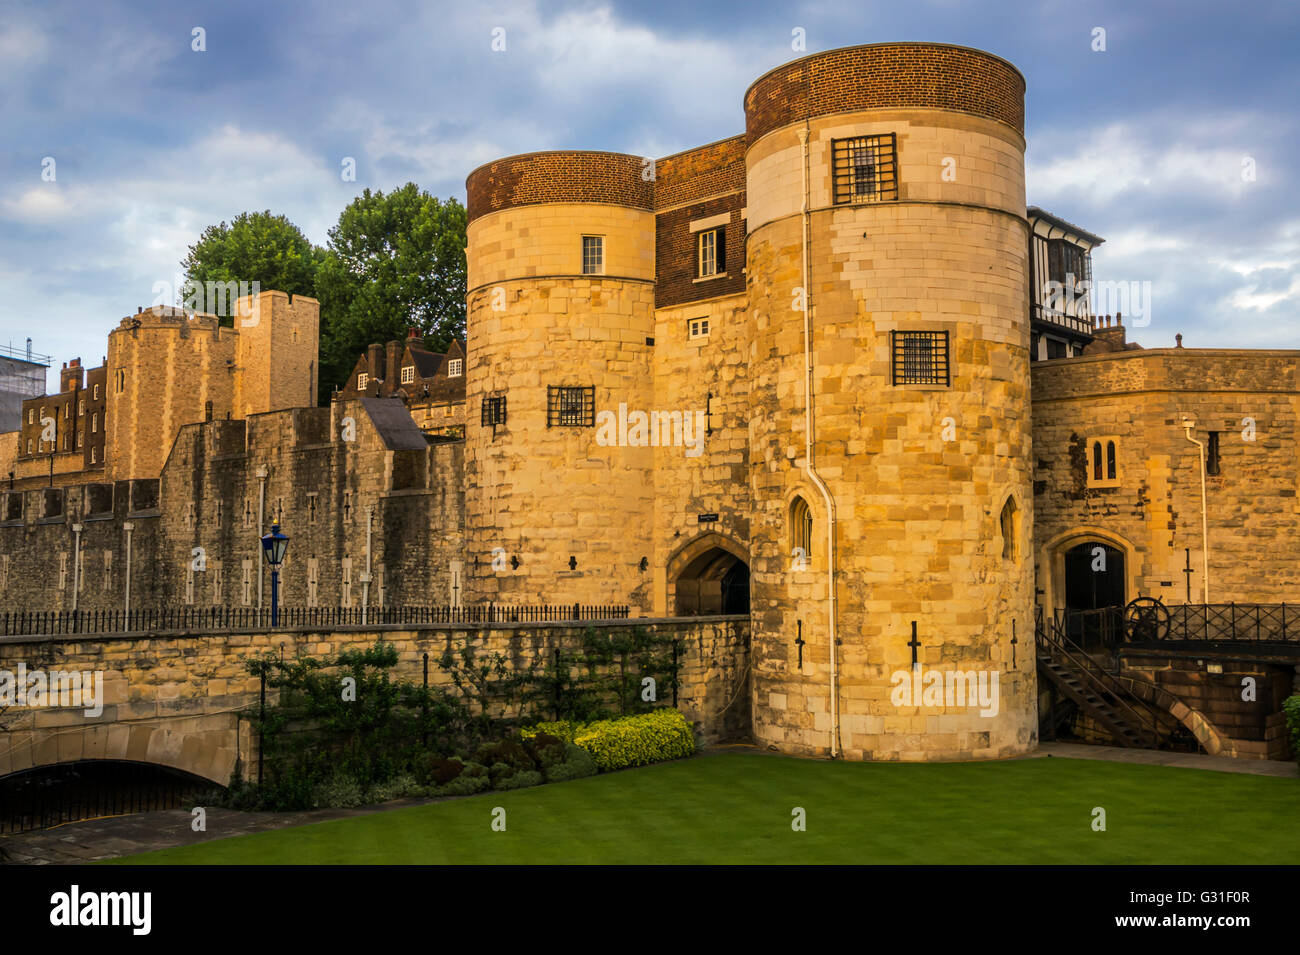 The Tower of London, London England, UK. Stock Photo